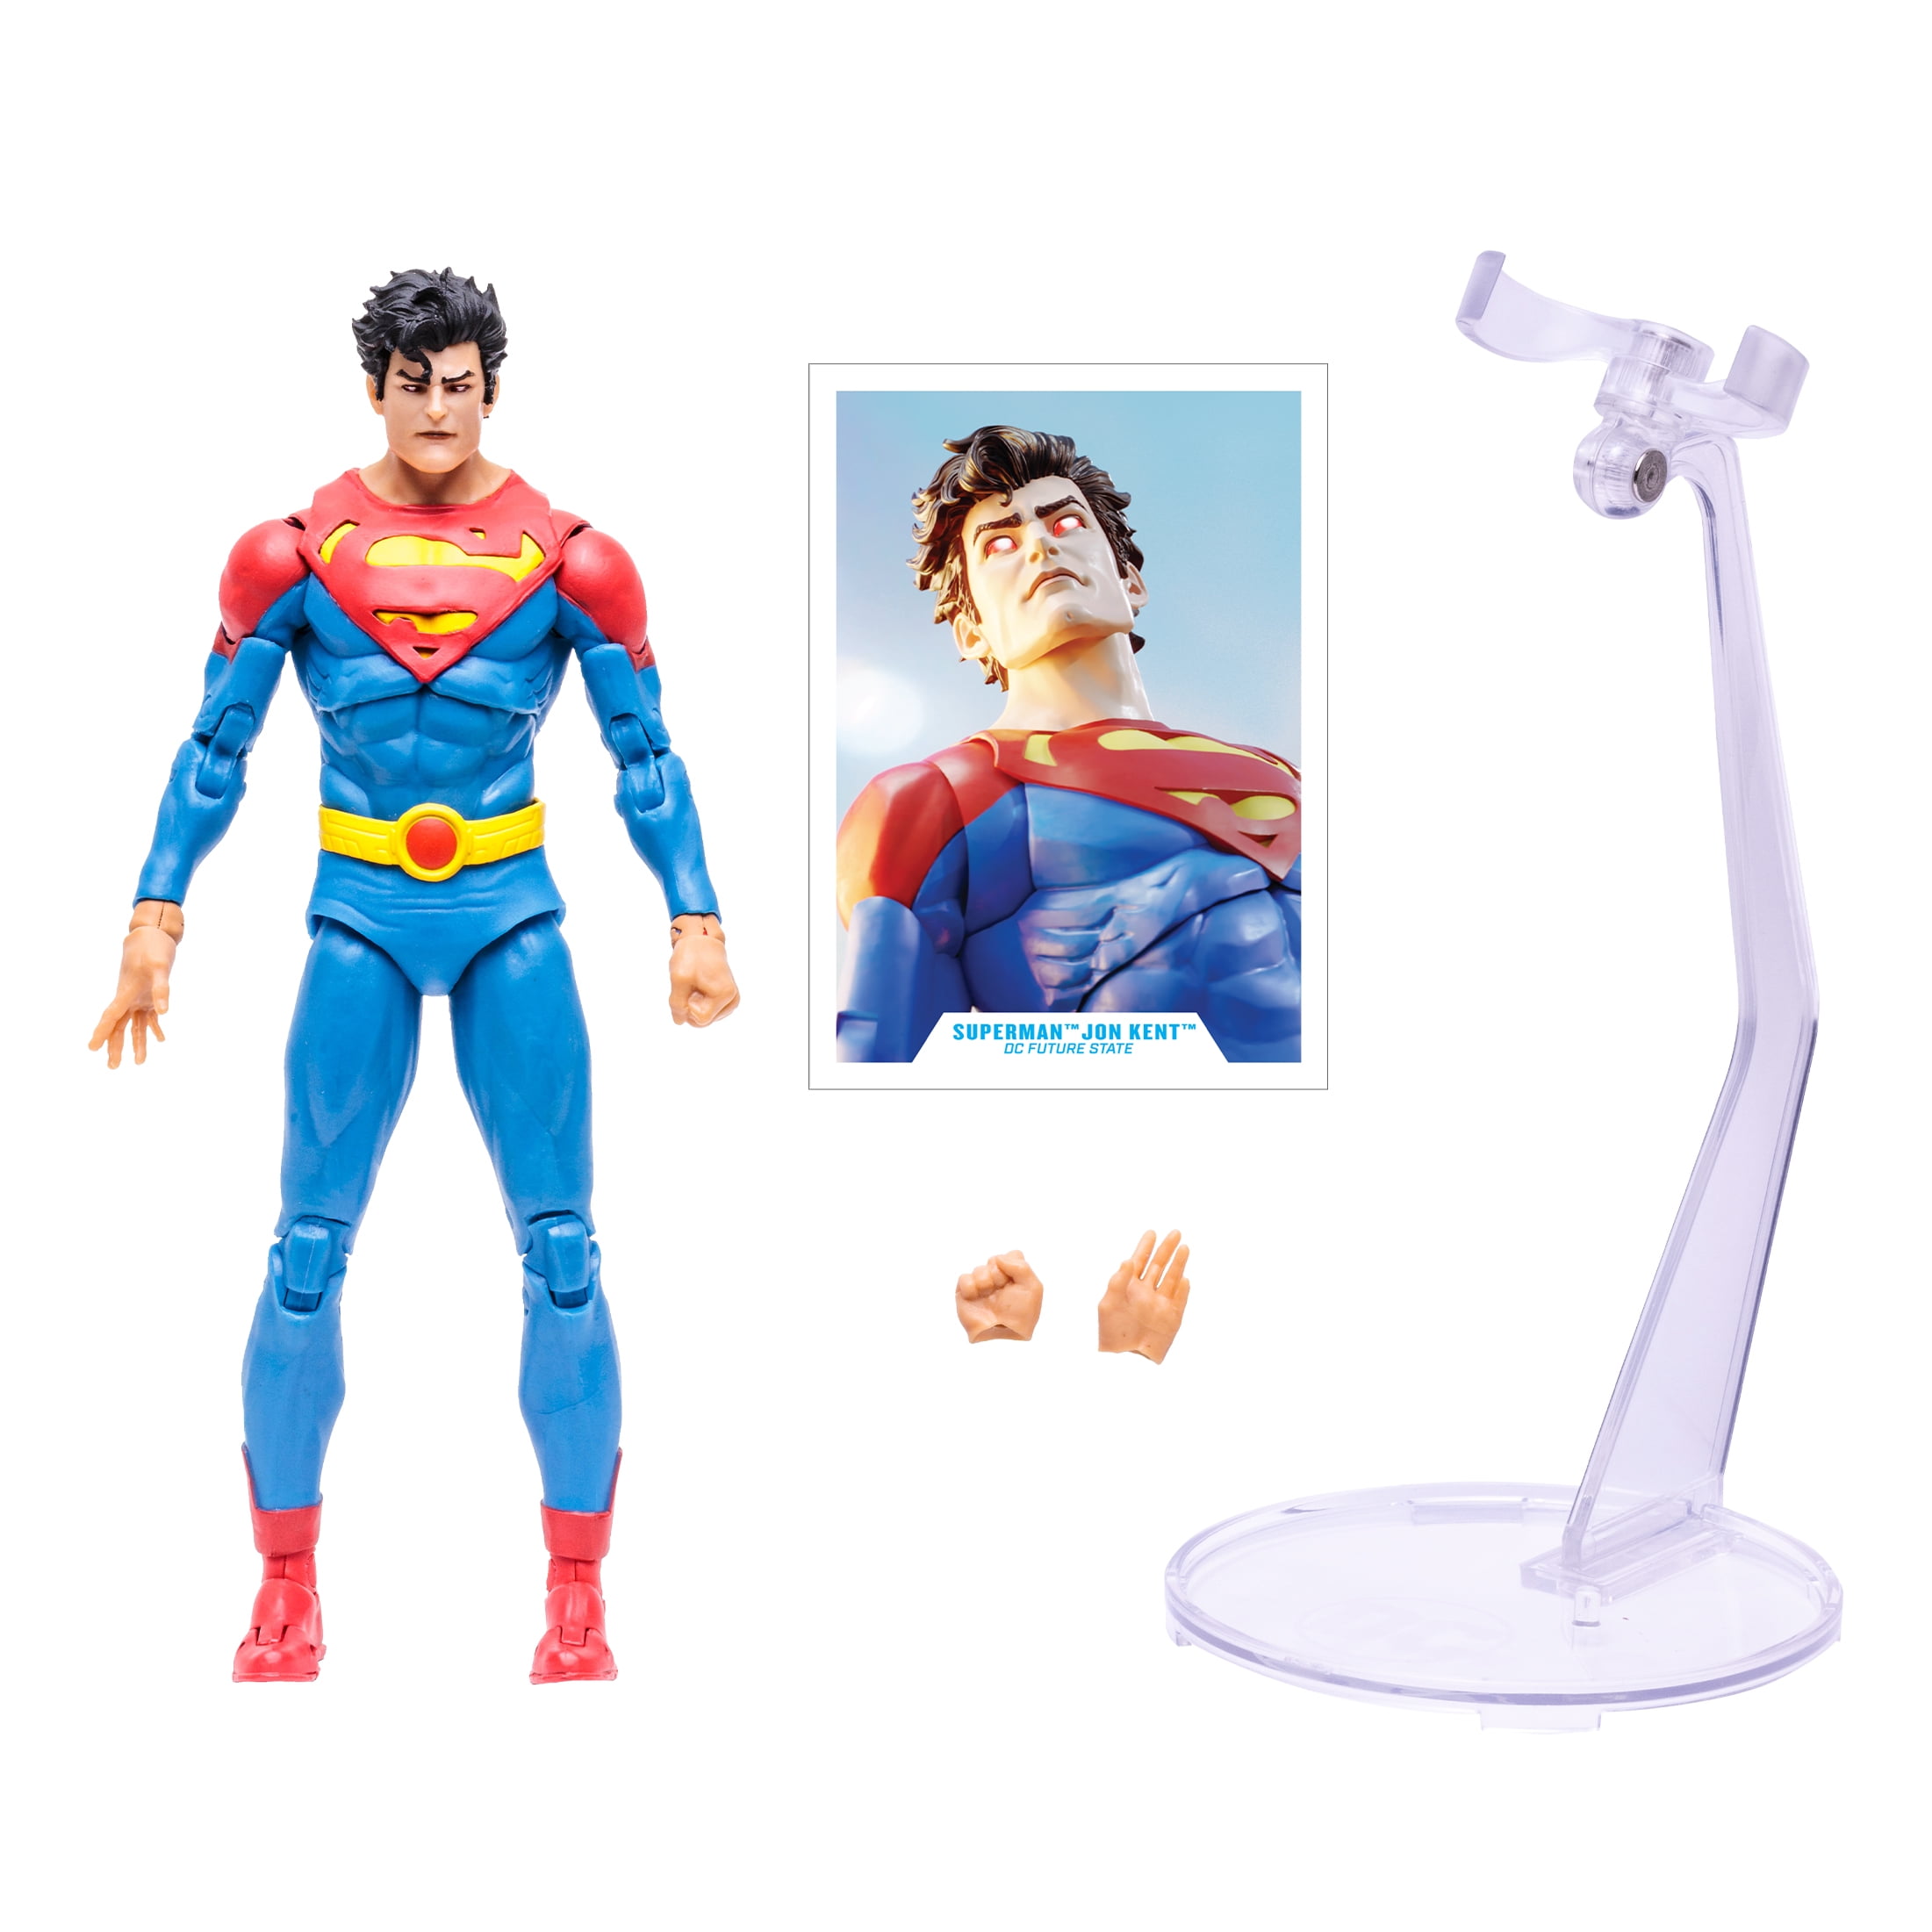 Acheter DC Multiverse Figurine Superman: Lois and Clark McFarlane